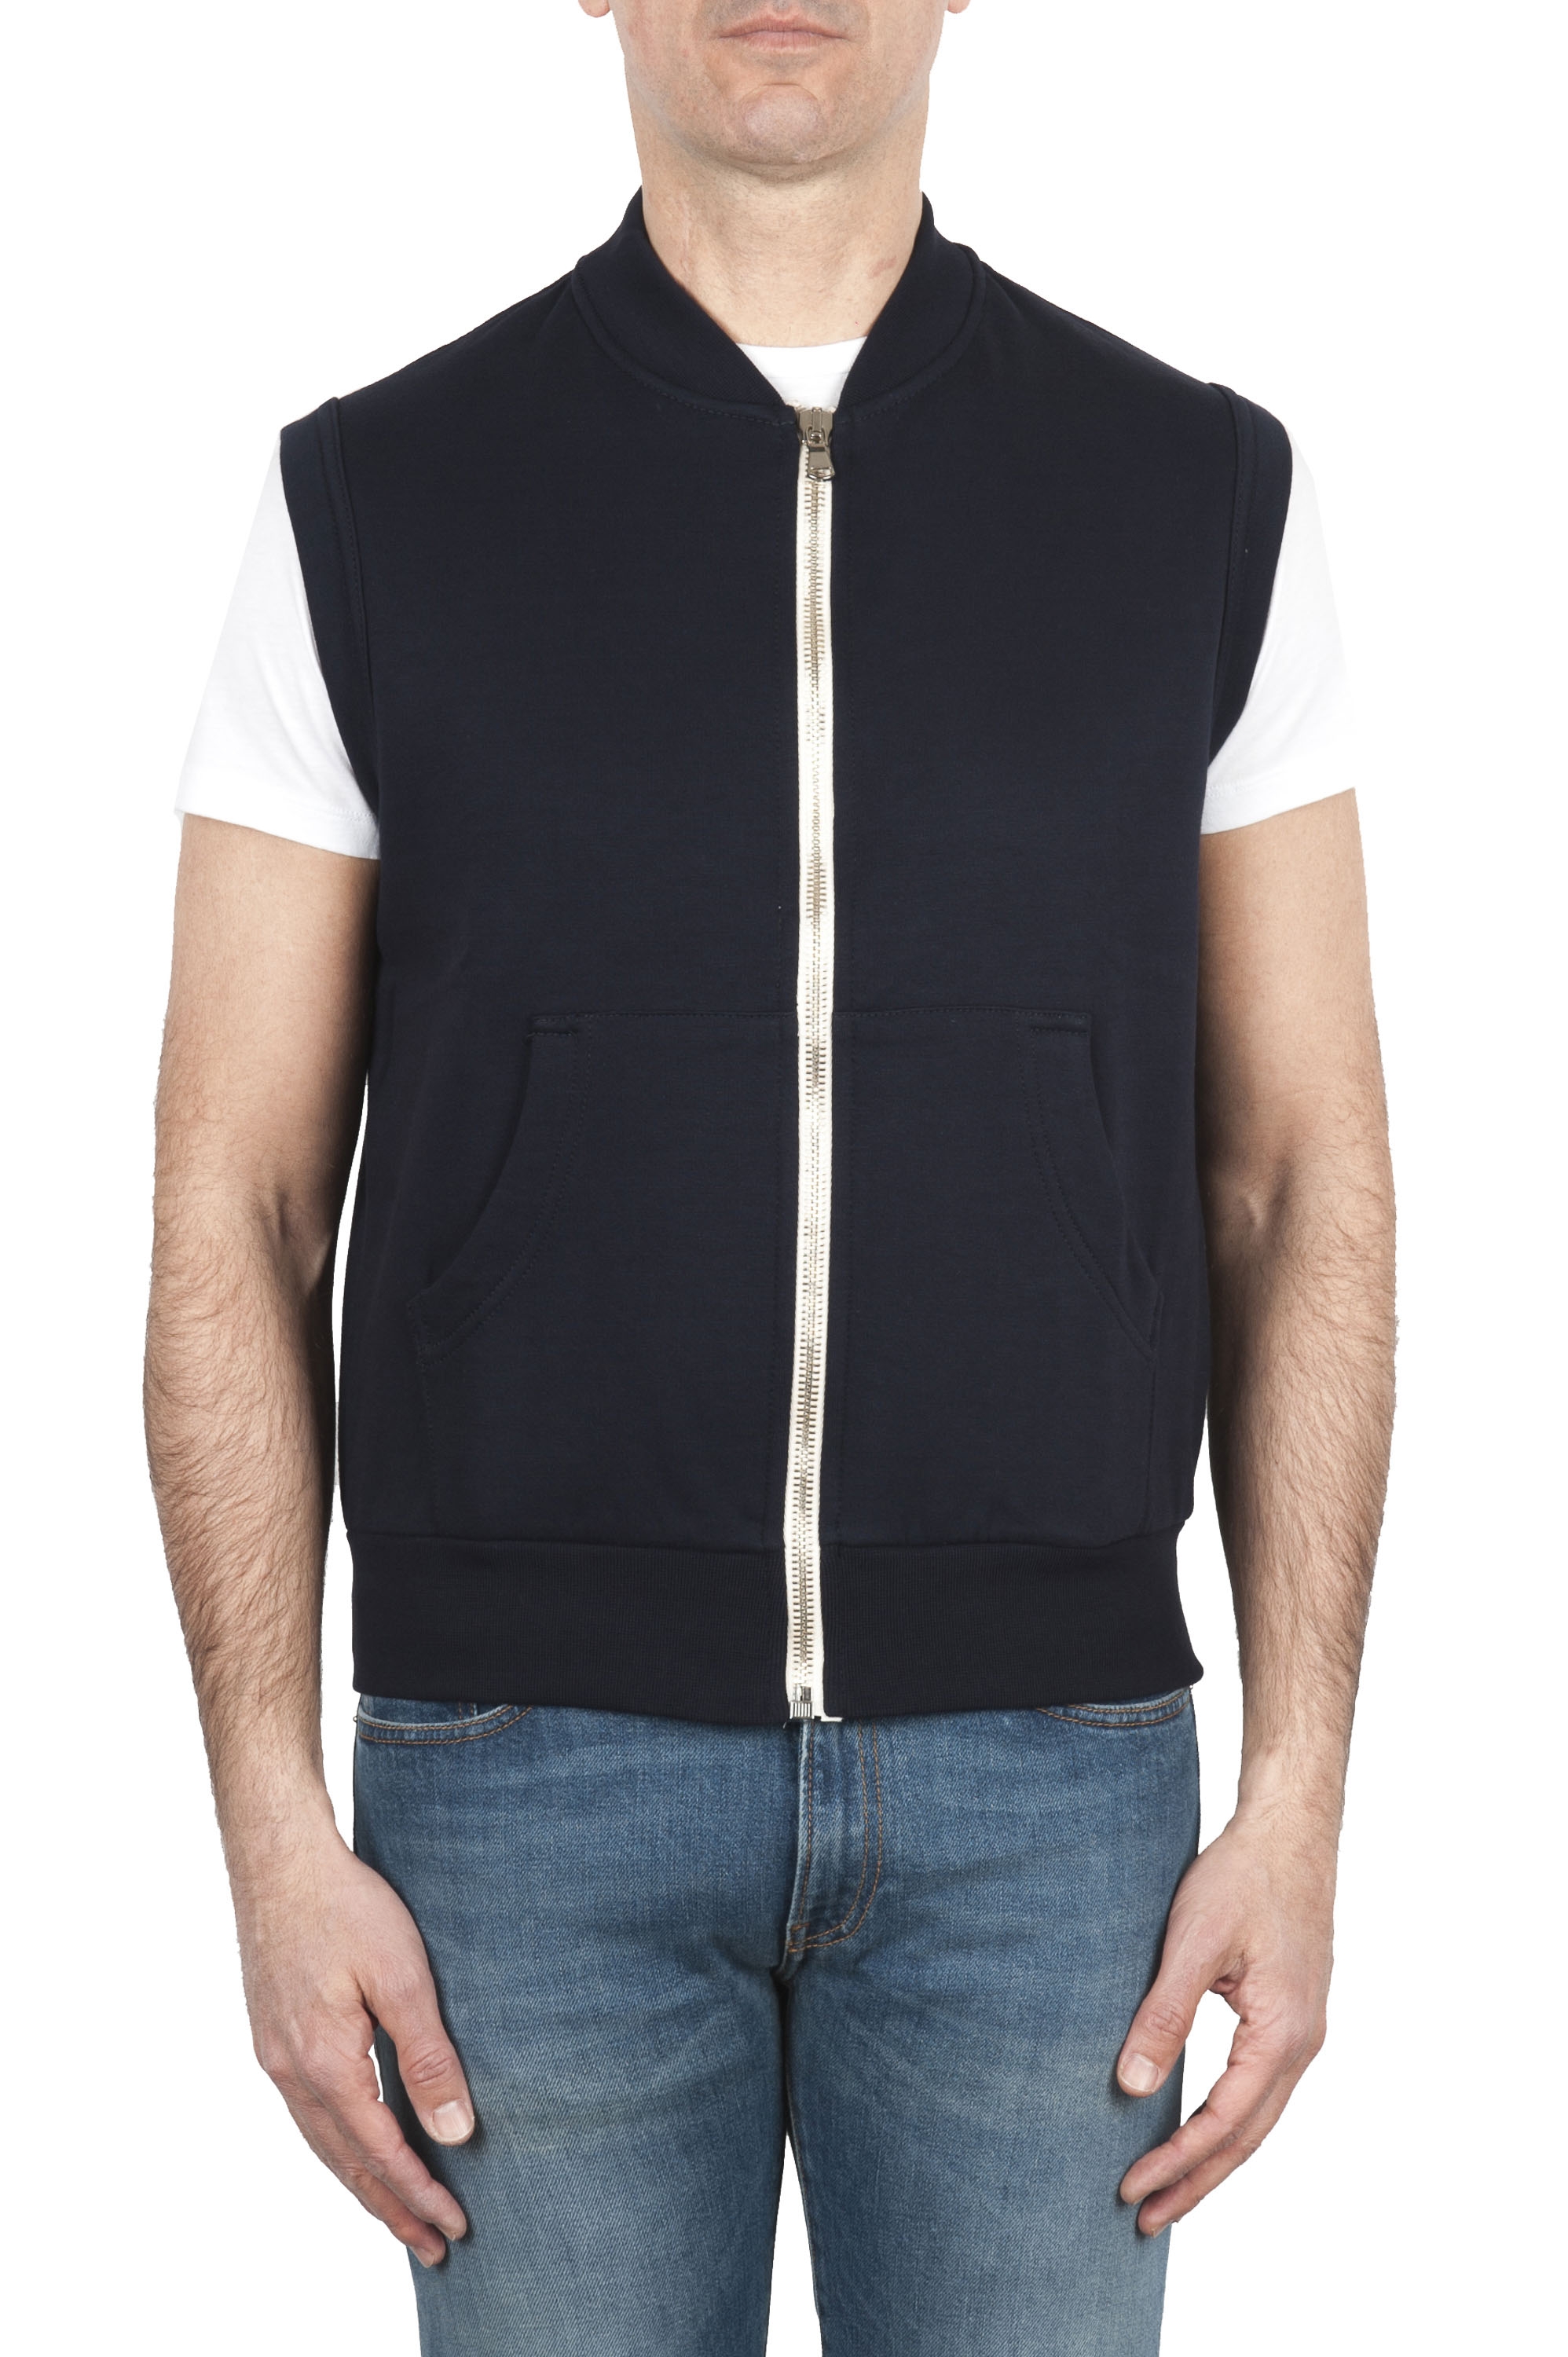 SBU 01767 Blue cotton jersey sweatshirt vest 01